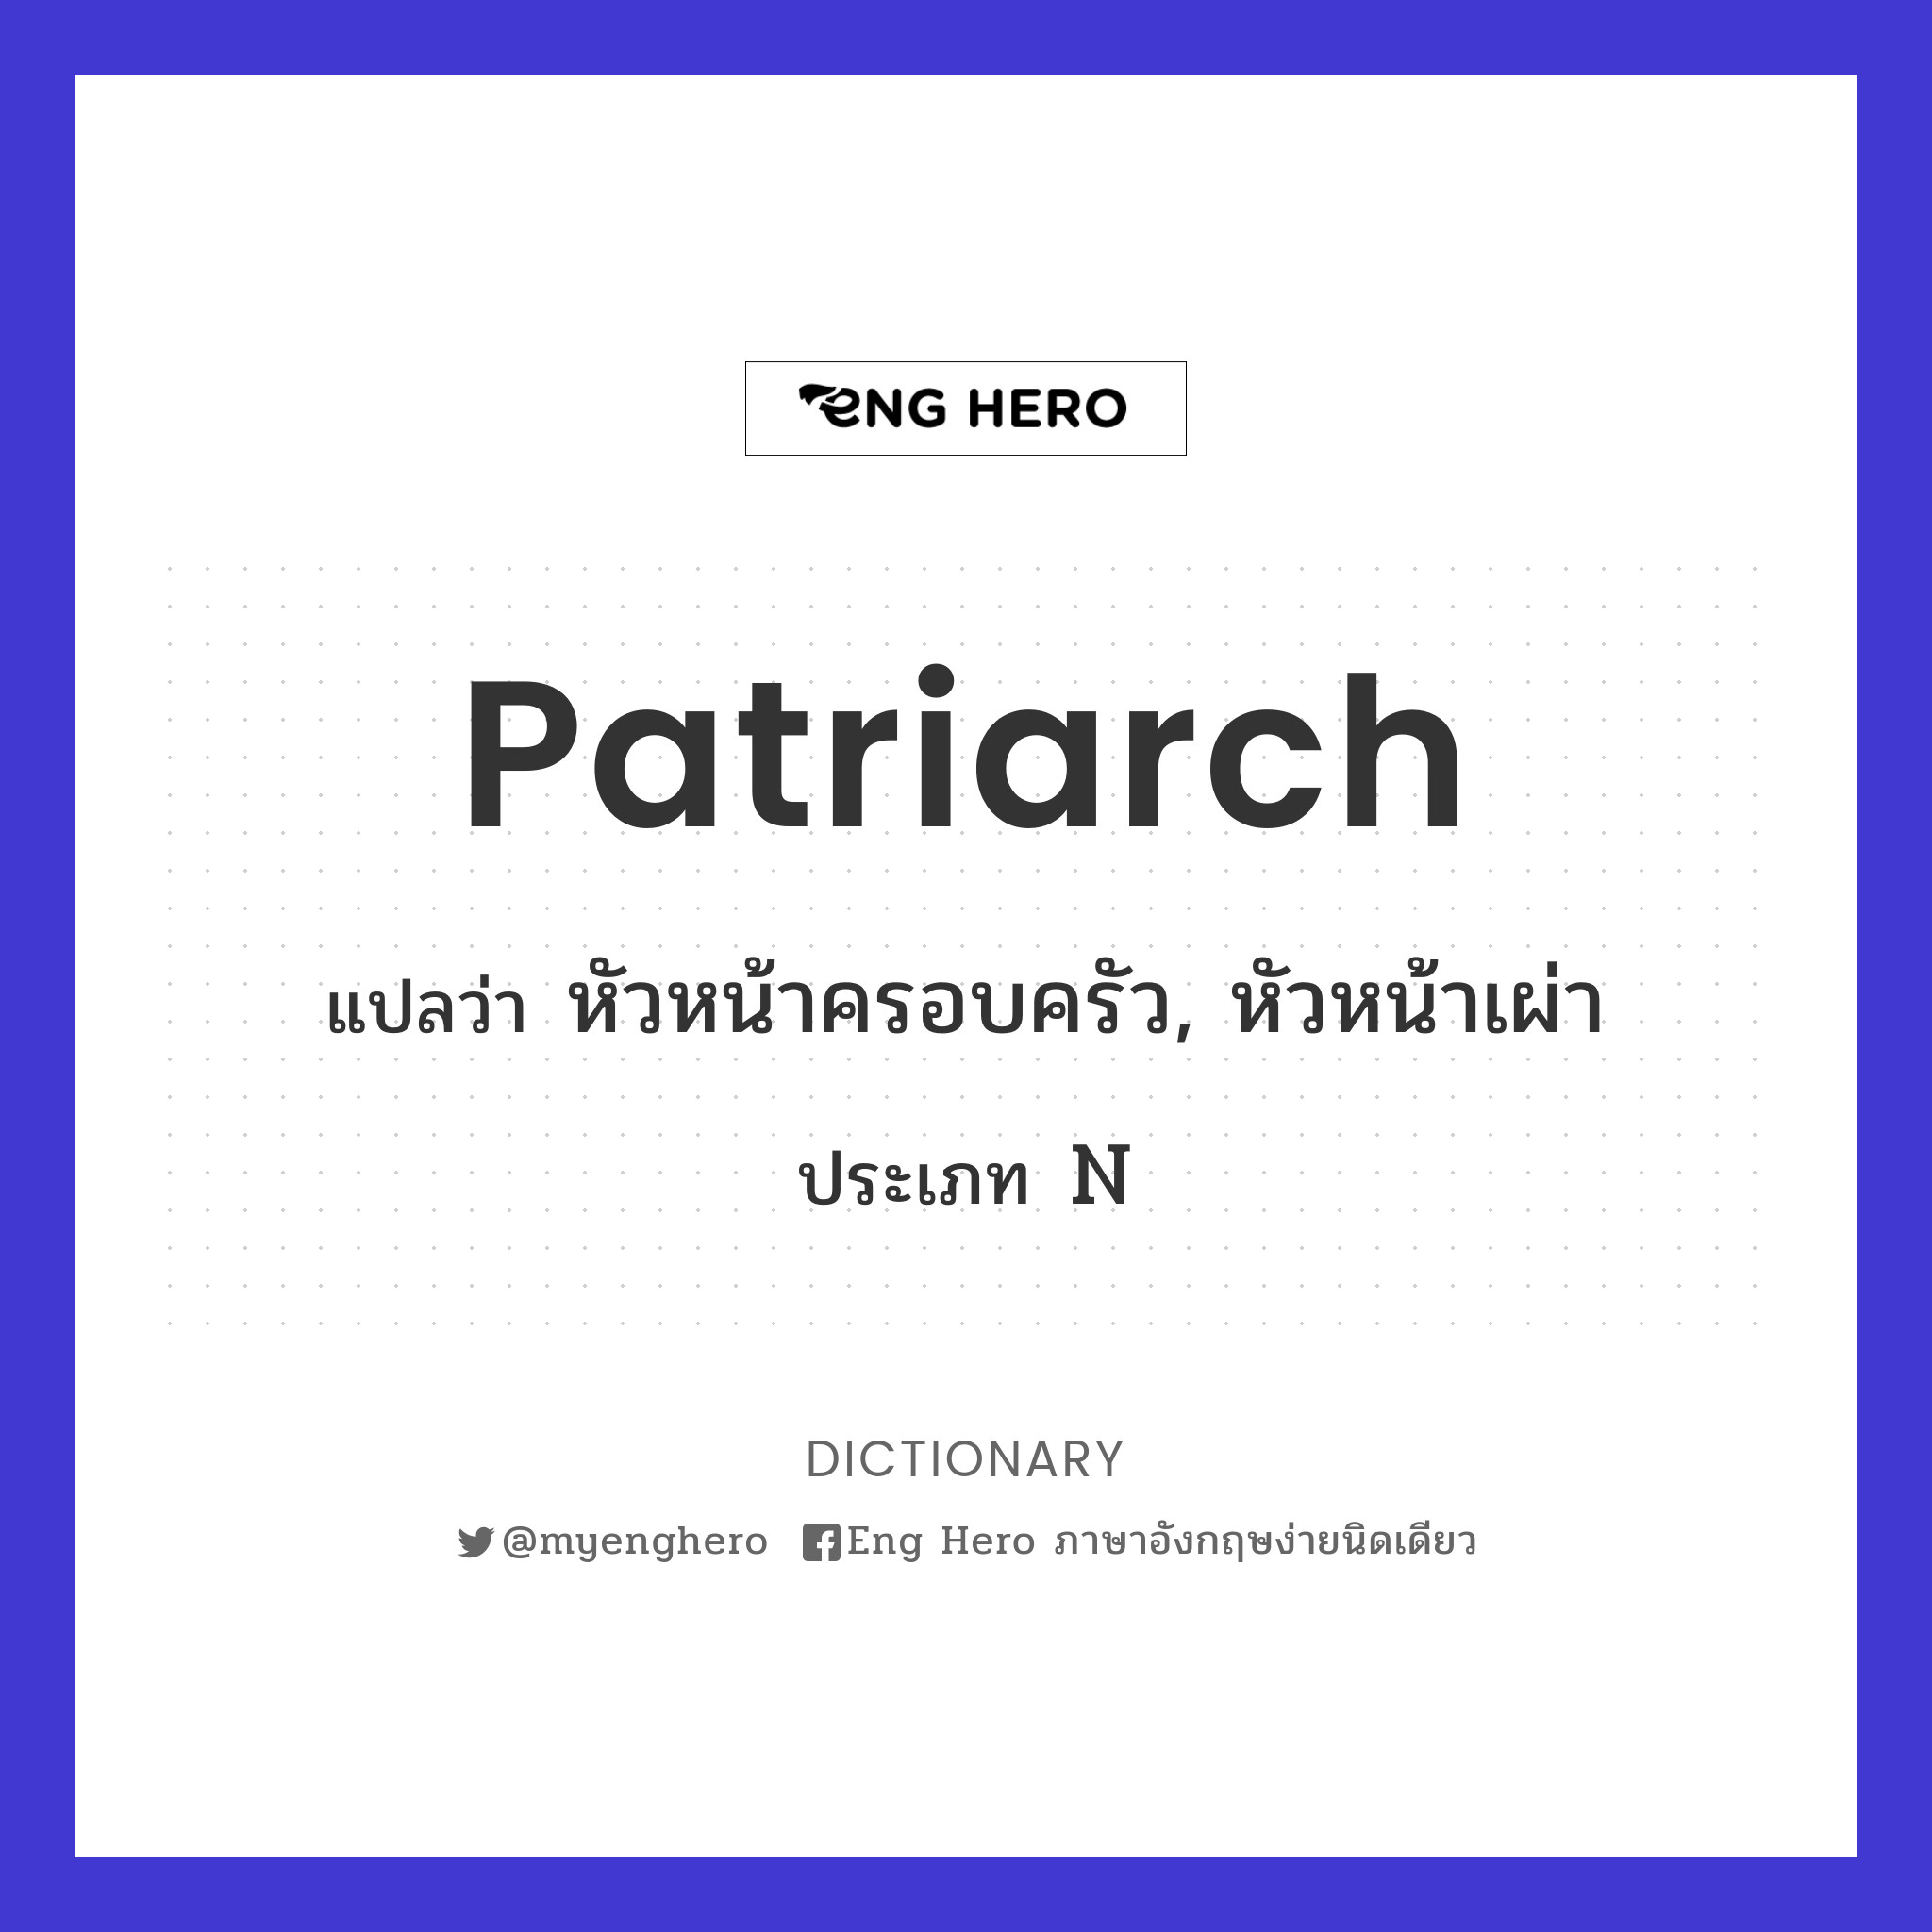 patriarch